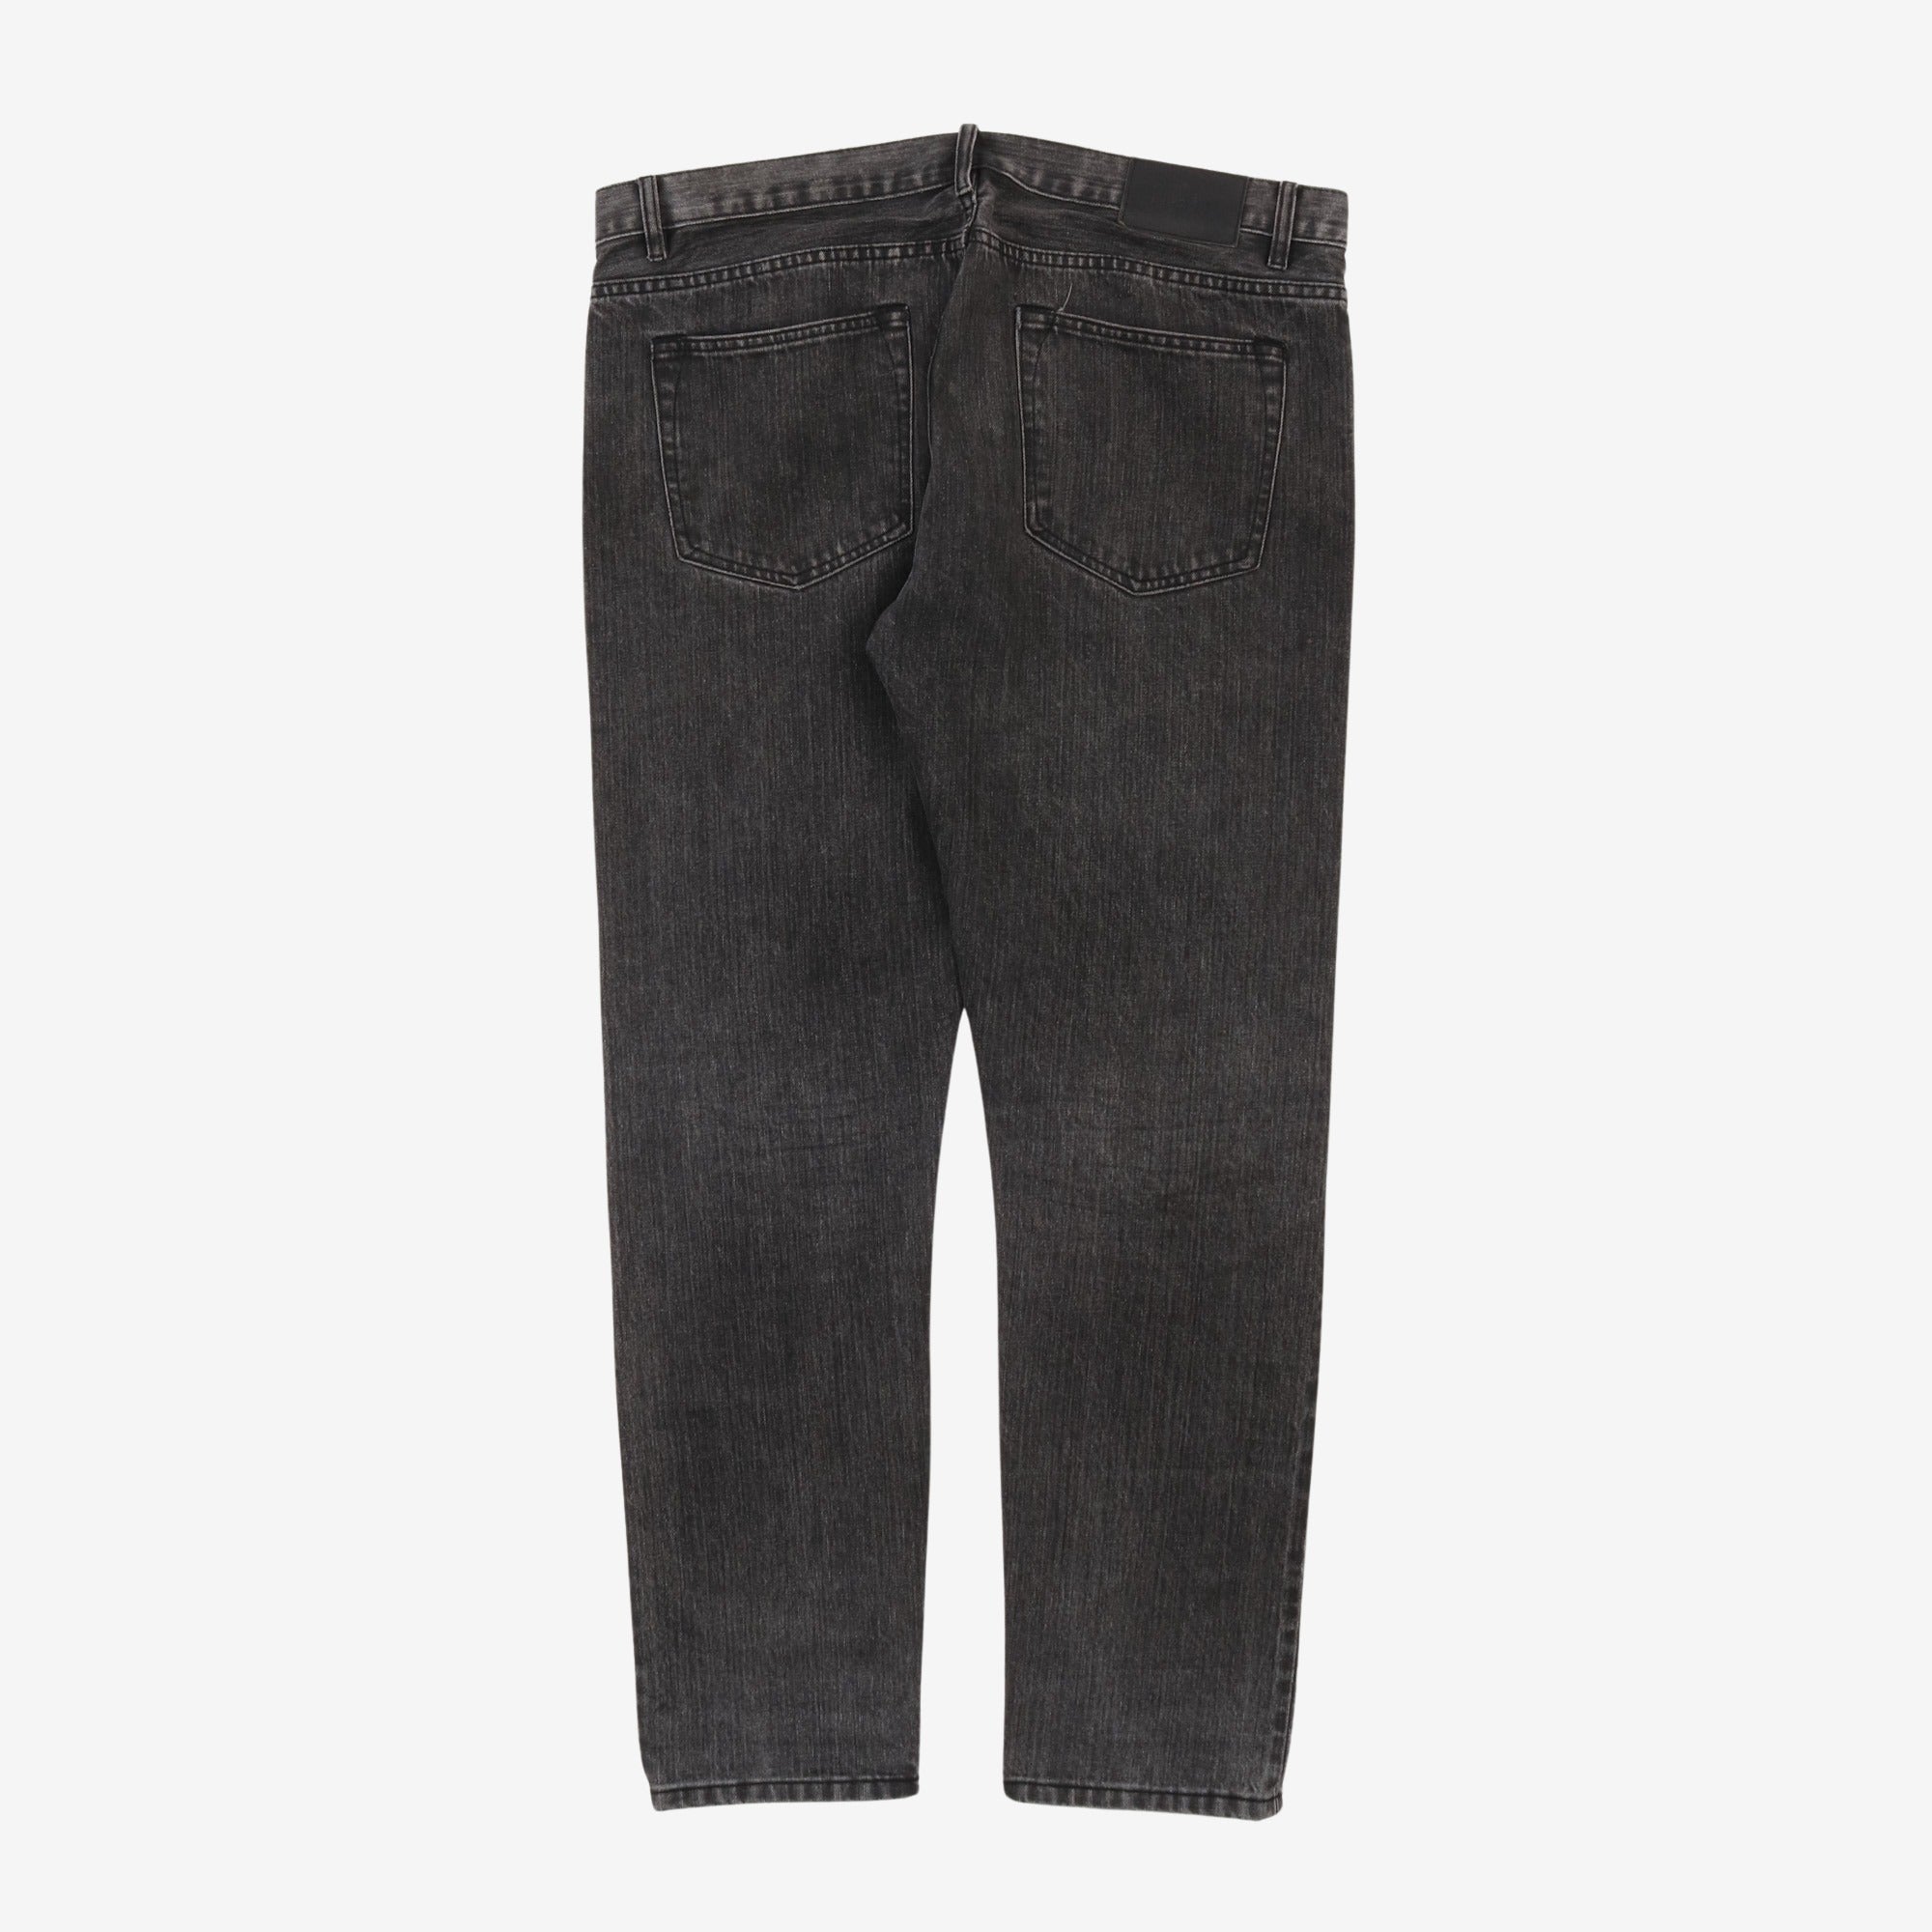 Selvedge Denim Jeans (Fits 38)